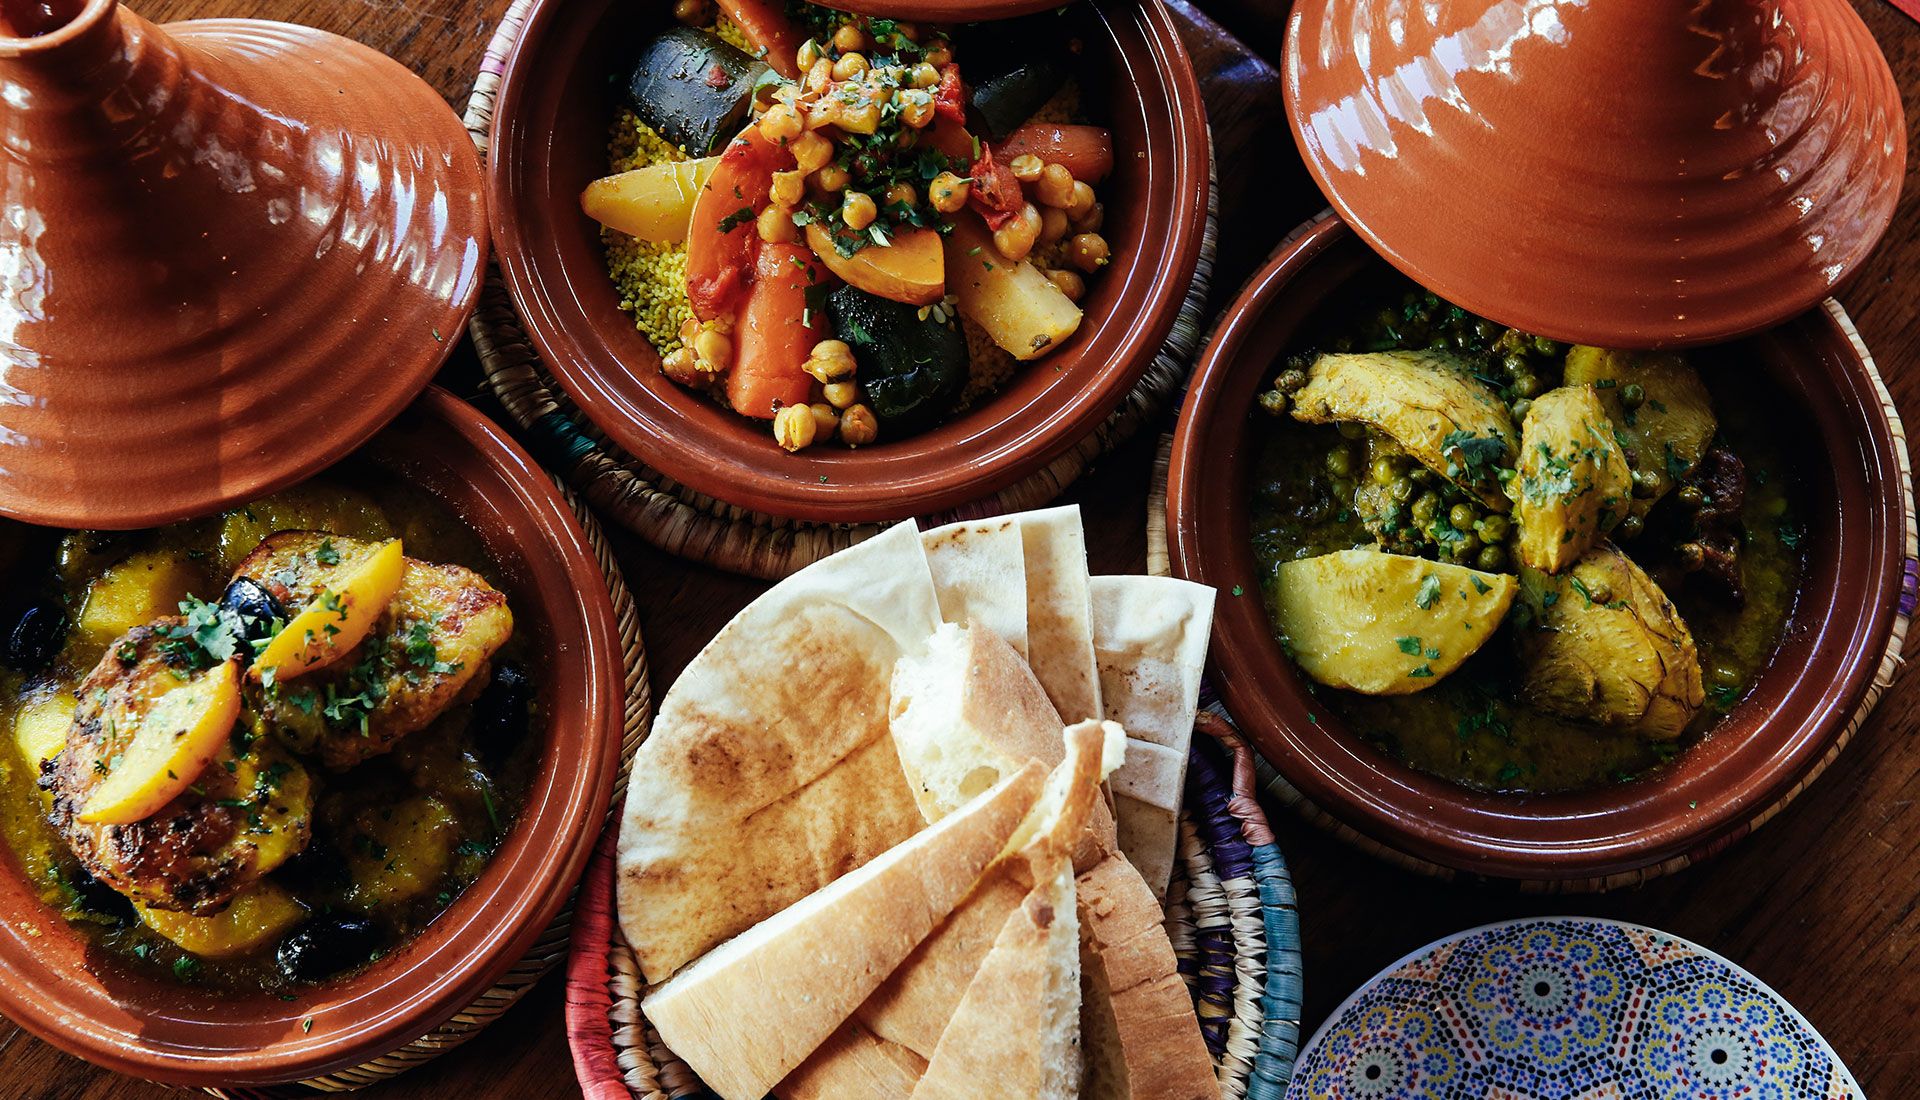 Barbès - Mezze & Specialiteés Marocaines